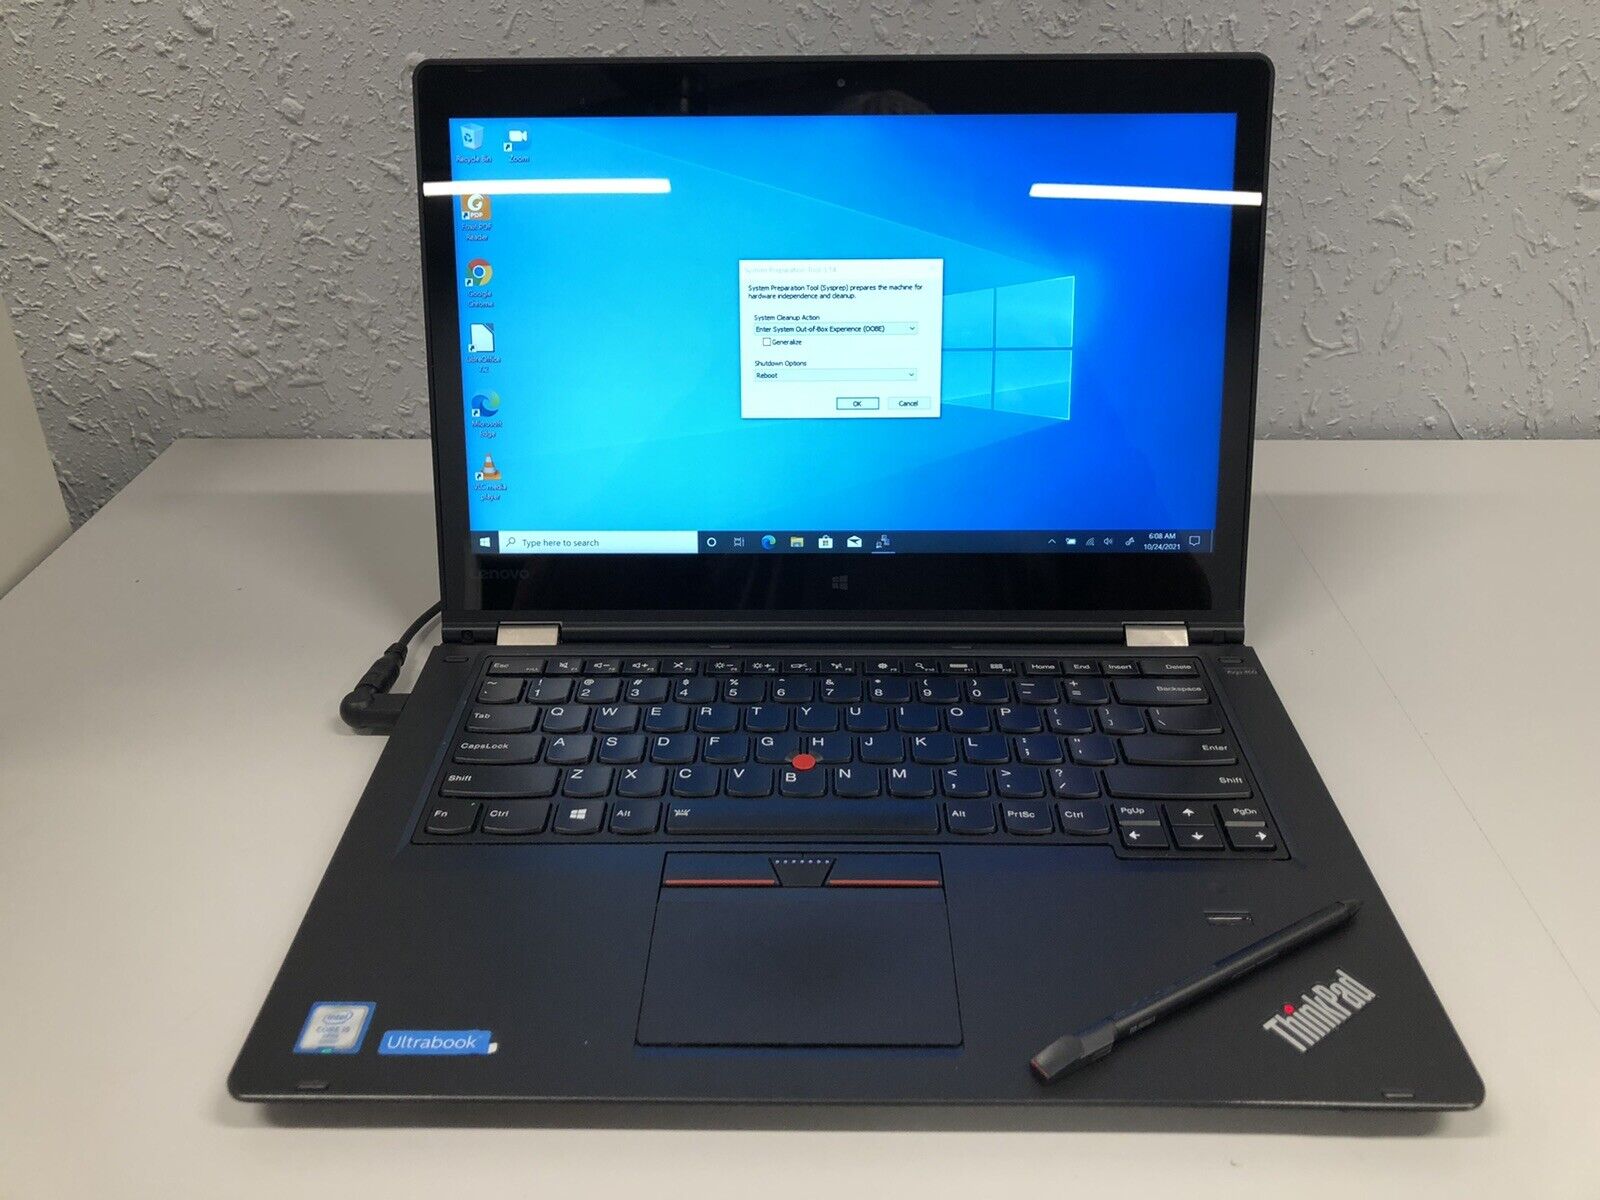 Lenovo ThinkPad Yoga 460 2-in-1 Laptop Price in Pakistan